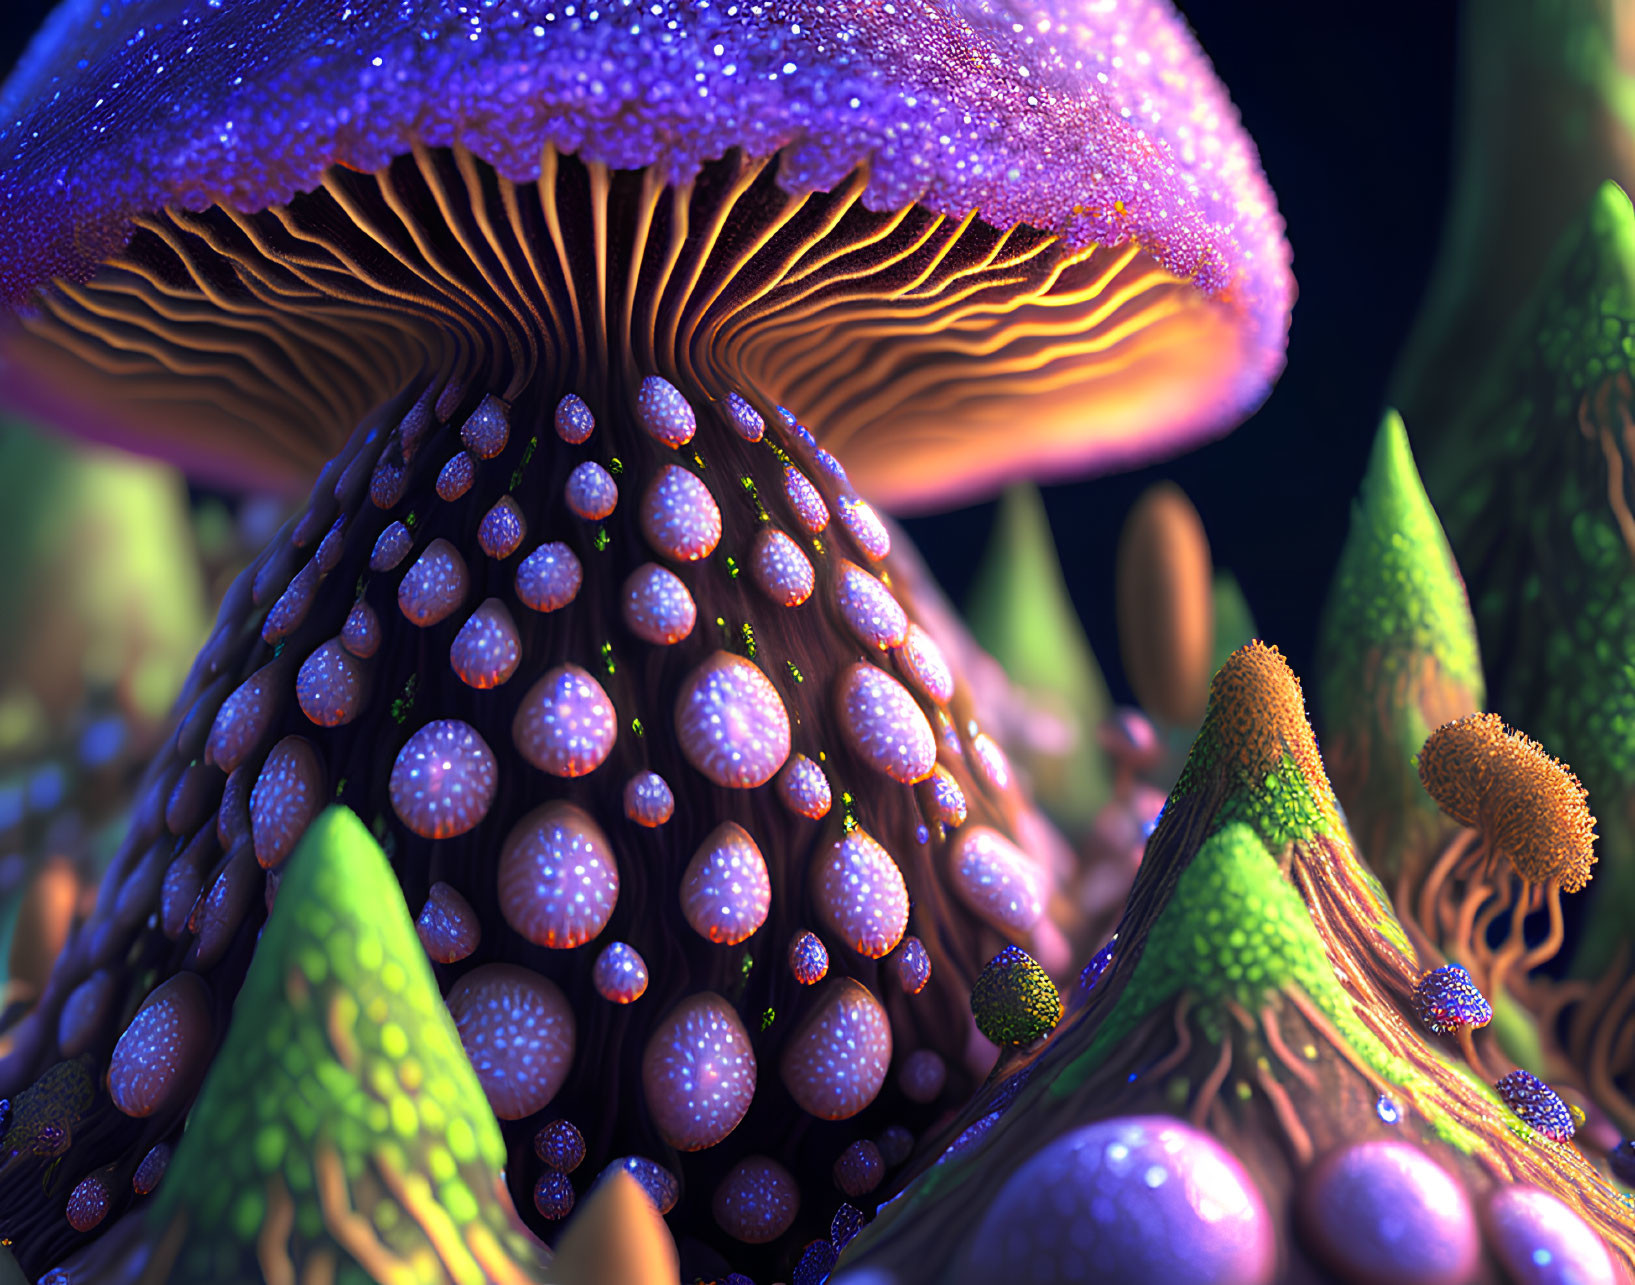 Colorful digital artwork: Fantasy scene with oversized mushrooms and textured vegetation